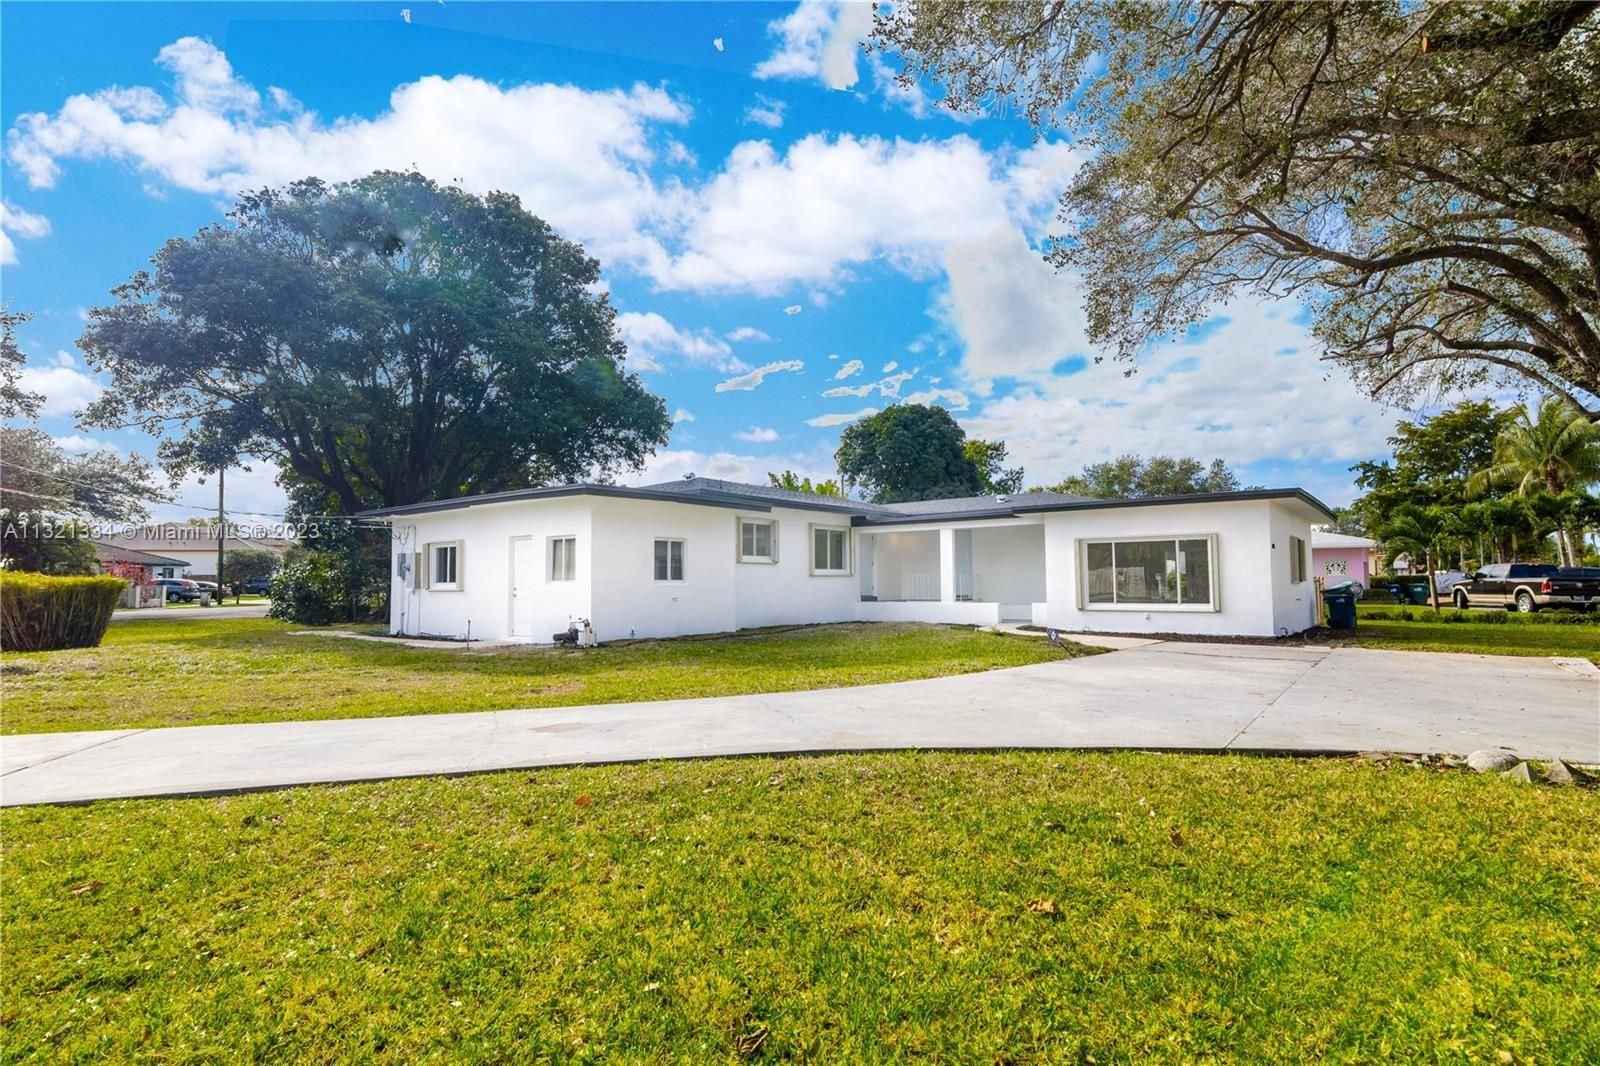 Real estate property located at 14415 14th Dr, Miami-Dade County, Miami, FL